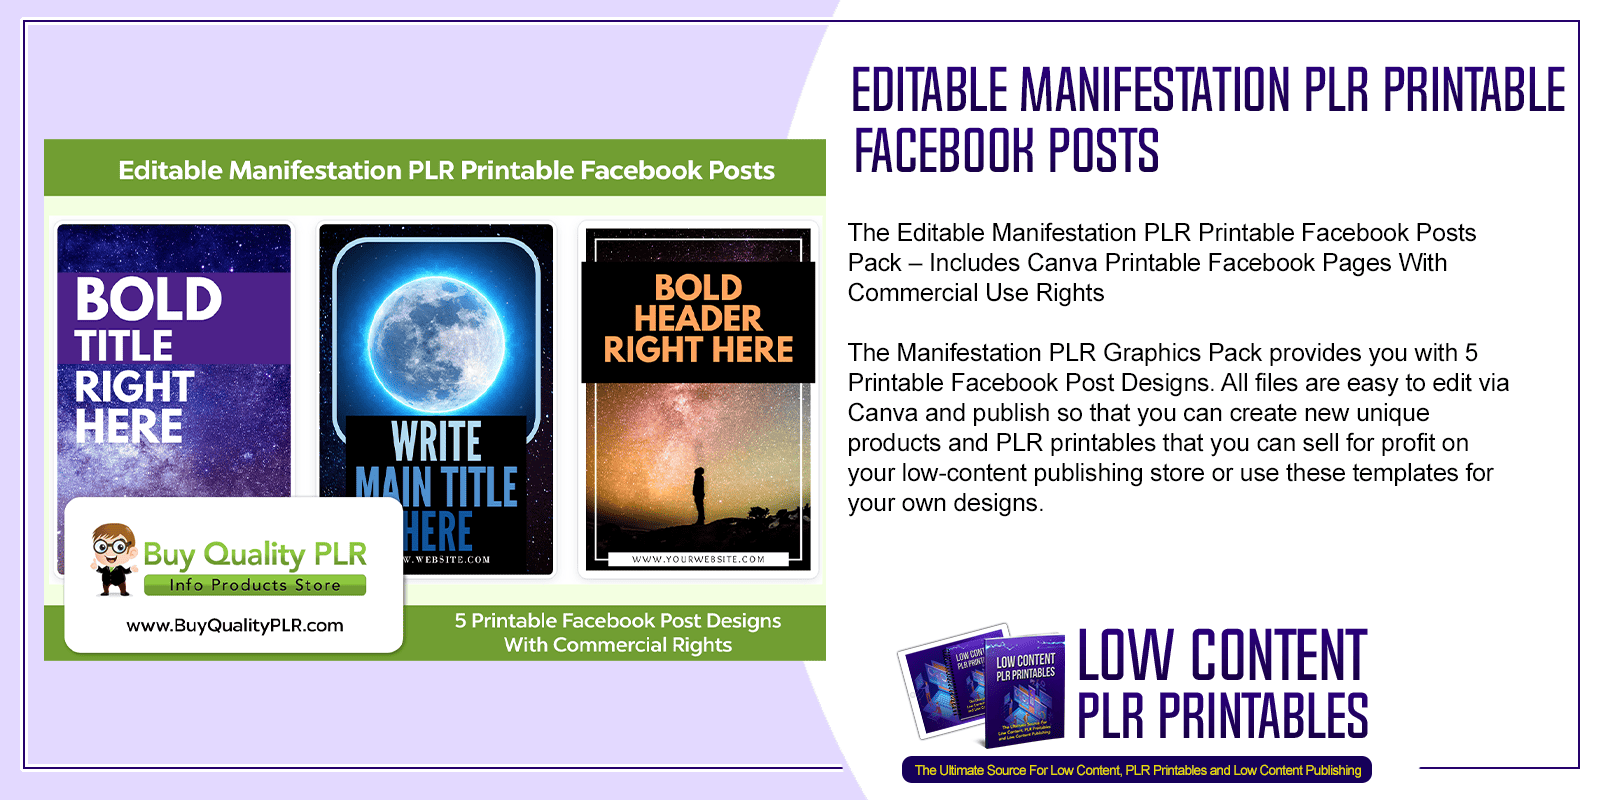 Editable Manifestation PLR Printable Facebook Posts